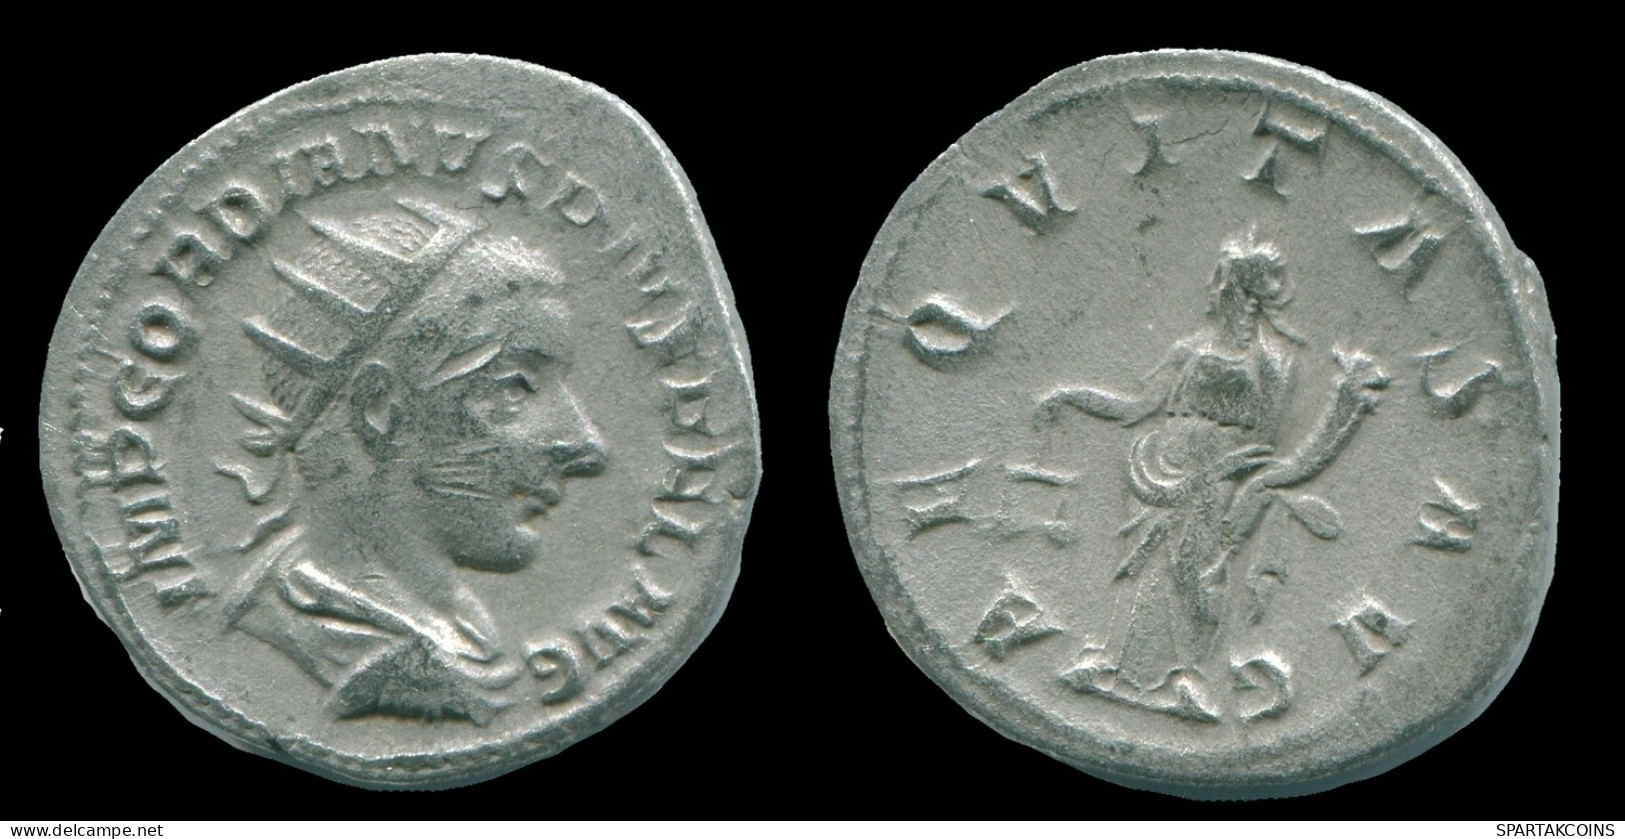 GORDIAN III AR ANTONINIANUS ROME Mint AD 240-241 AEQVITAS AVG #ANC13137.38.E.A - L'Anarchie Militaire (235 à 284)